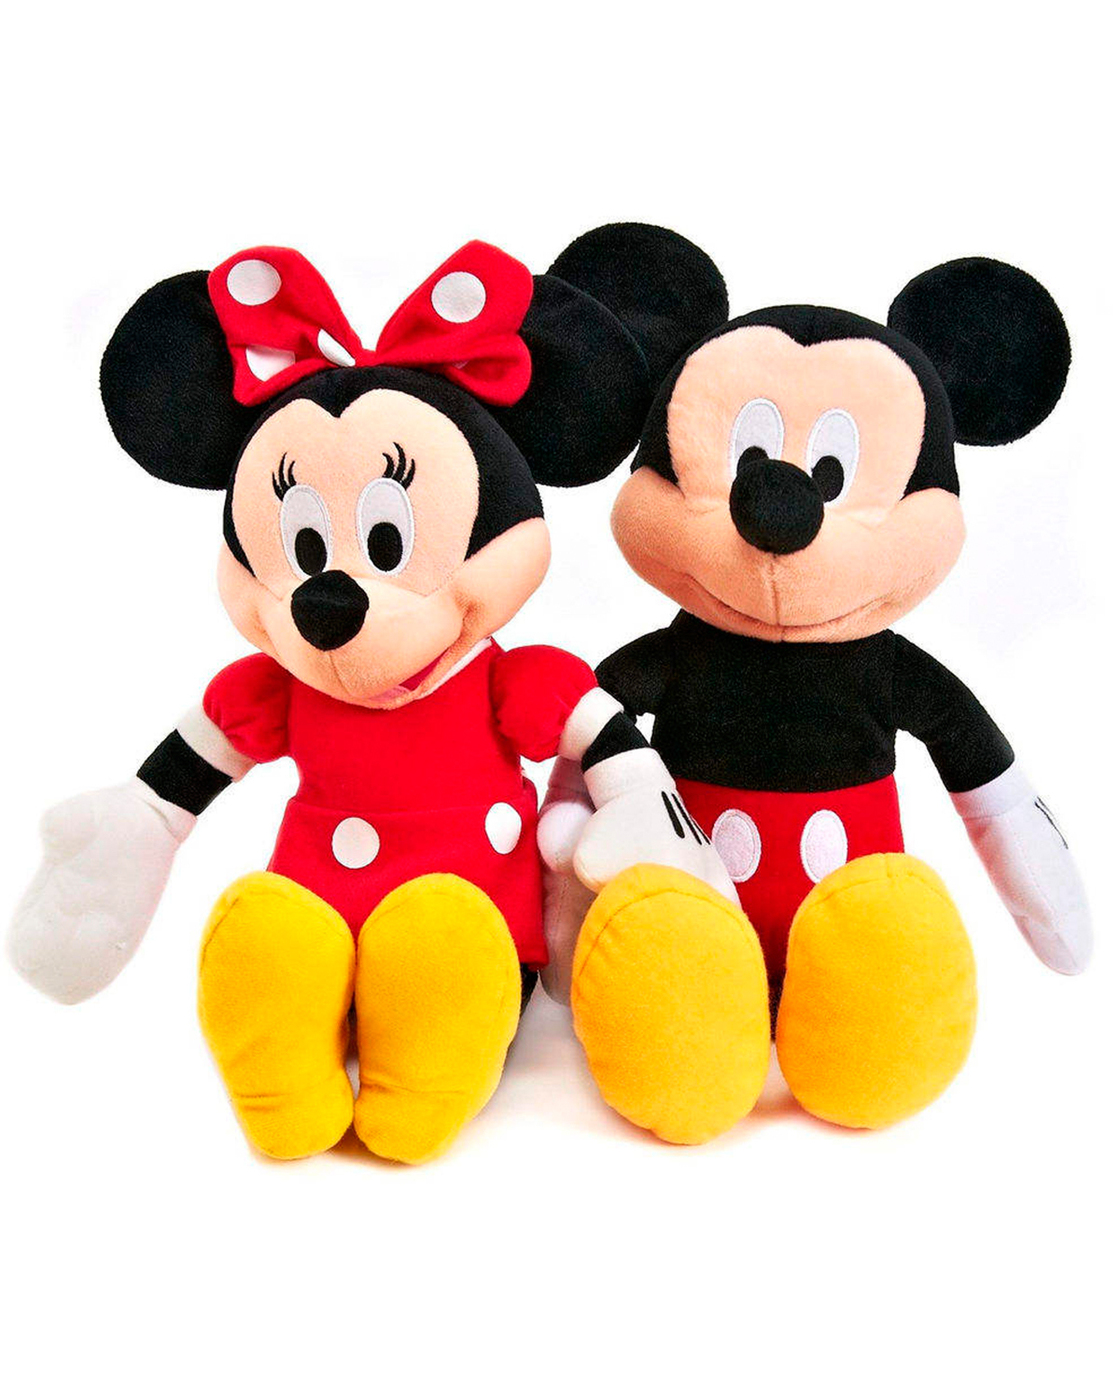 Мягкие игрушки Микки и Минни Маус Mickey Minnie Mouse, 2 шт. 35 см зубная щетка oral b kids mickey mouse микки маус от 2 до 4 лет мягкая красная